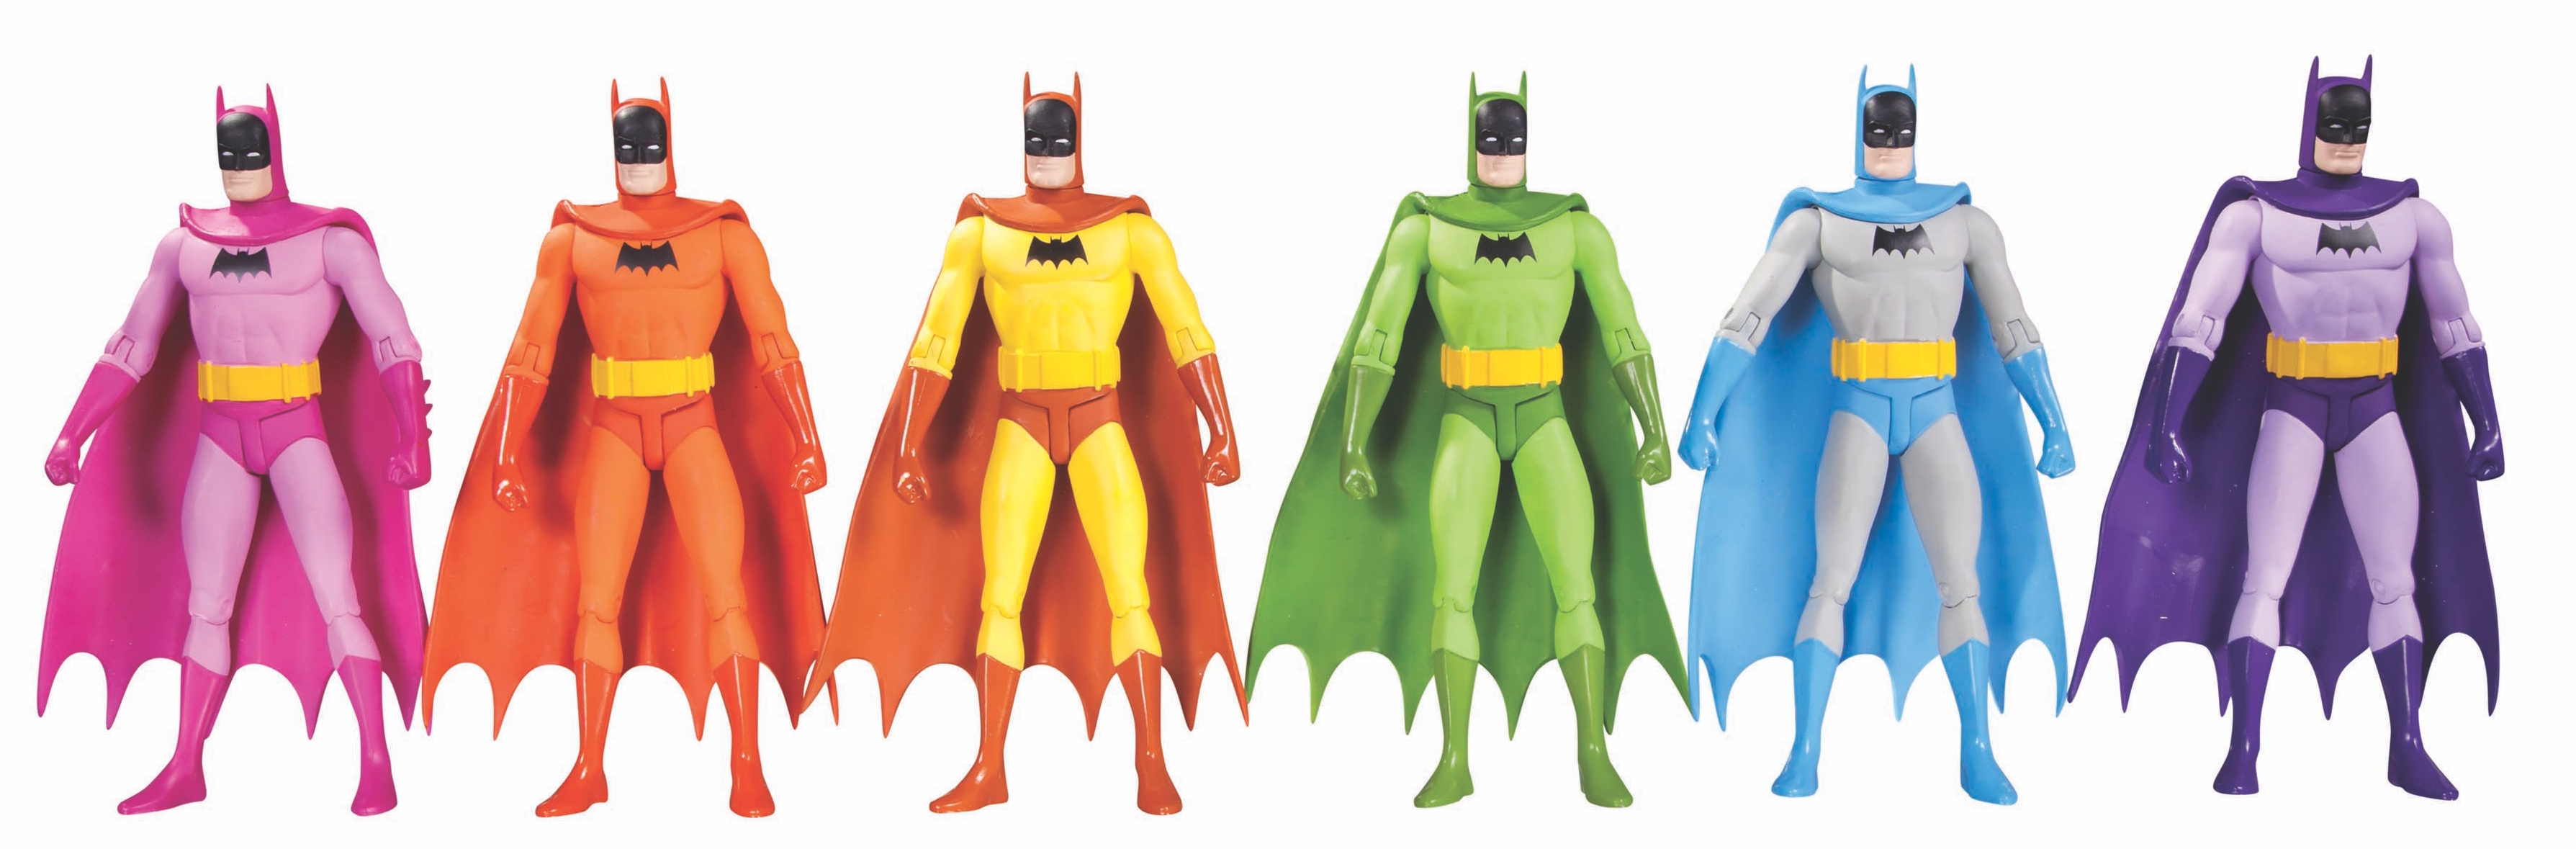 DC Collectibles Rainbow Batman Action Figures – 